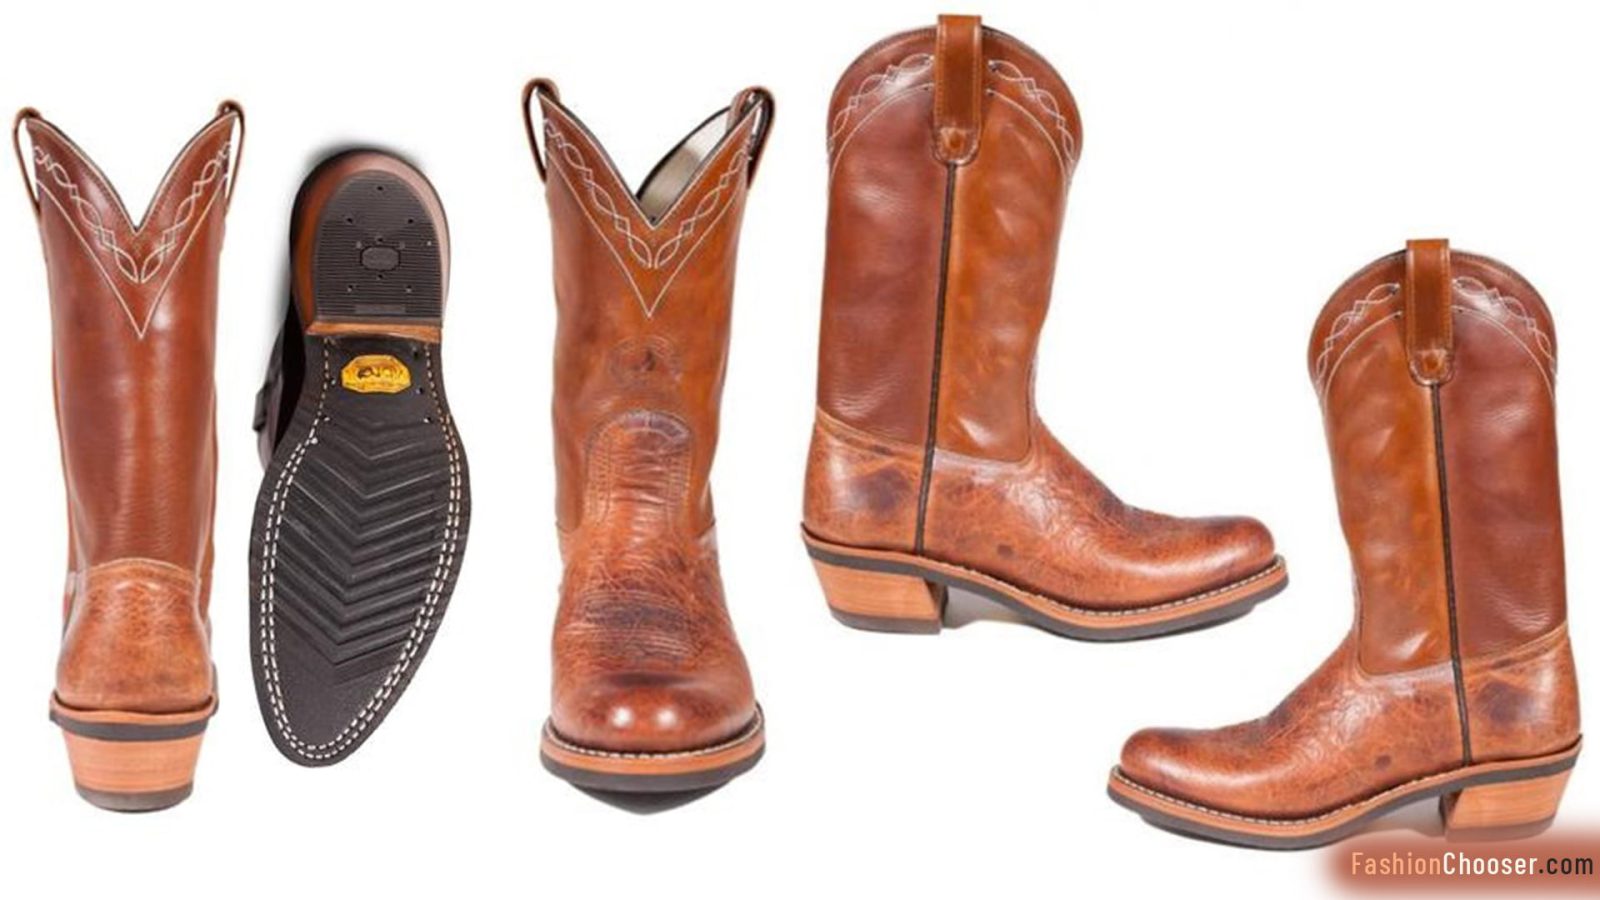 Whites plainsman boots are comfortable cowboy boots brand